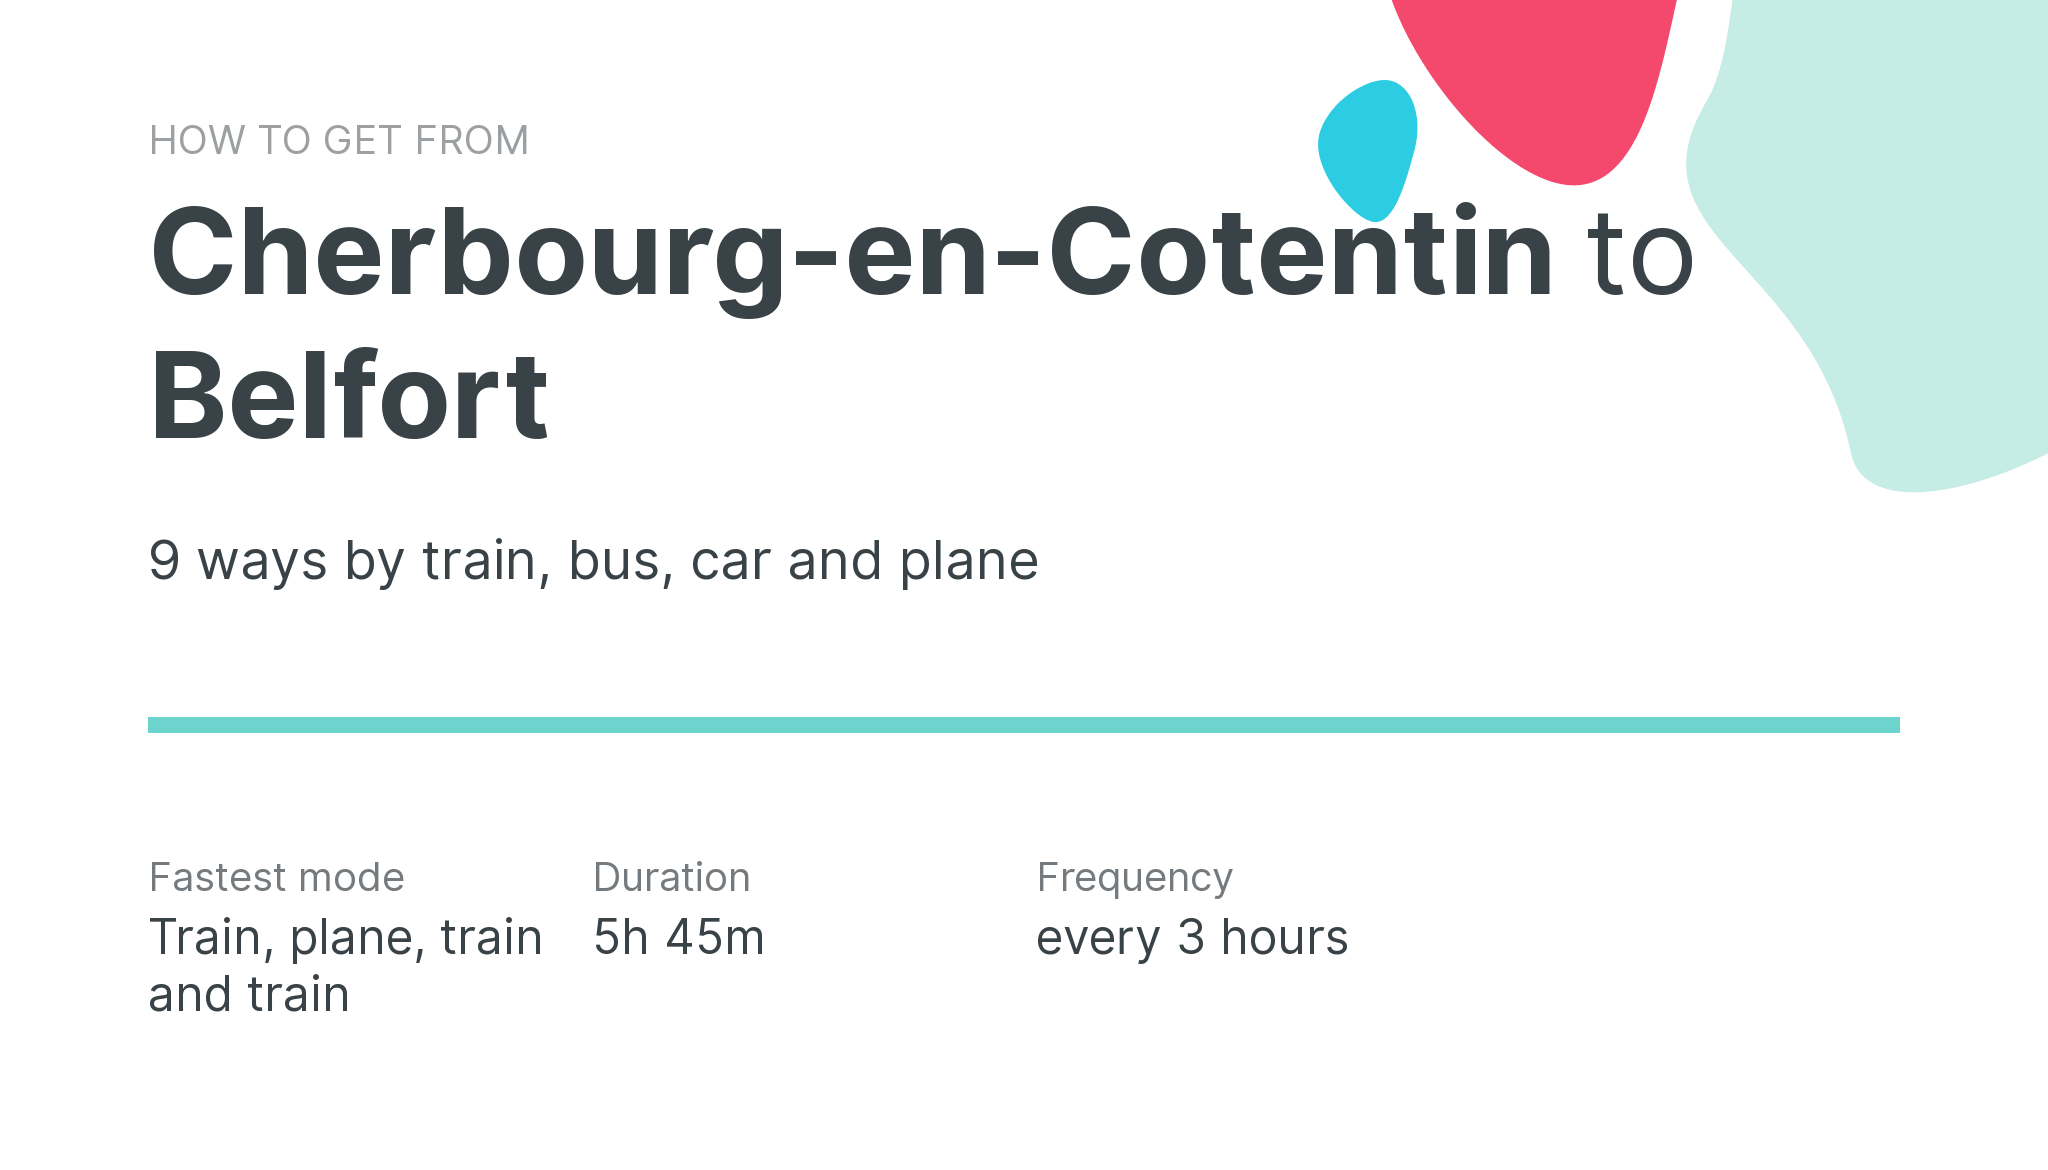 How do I get from Cherbourg-en-Cotentin to Belfort